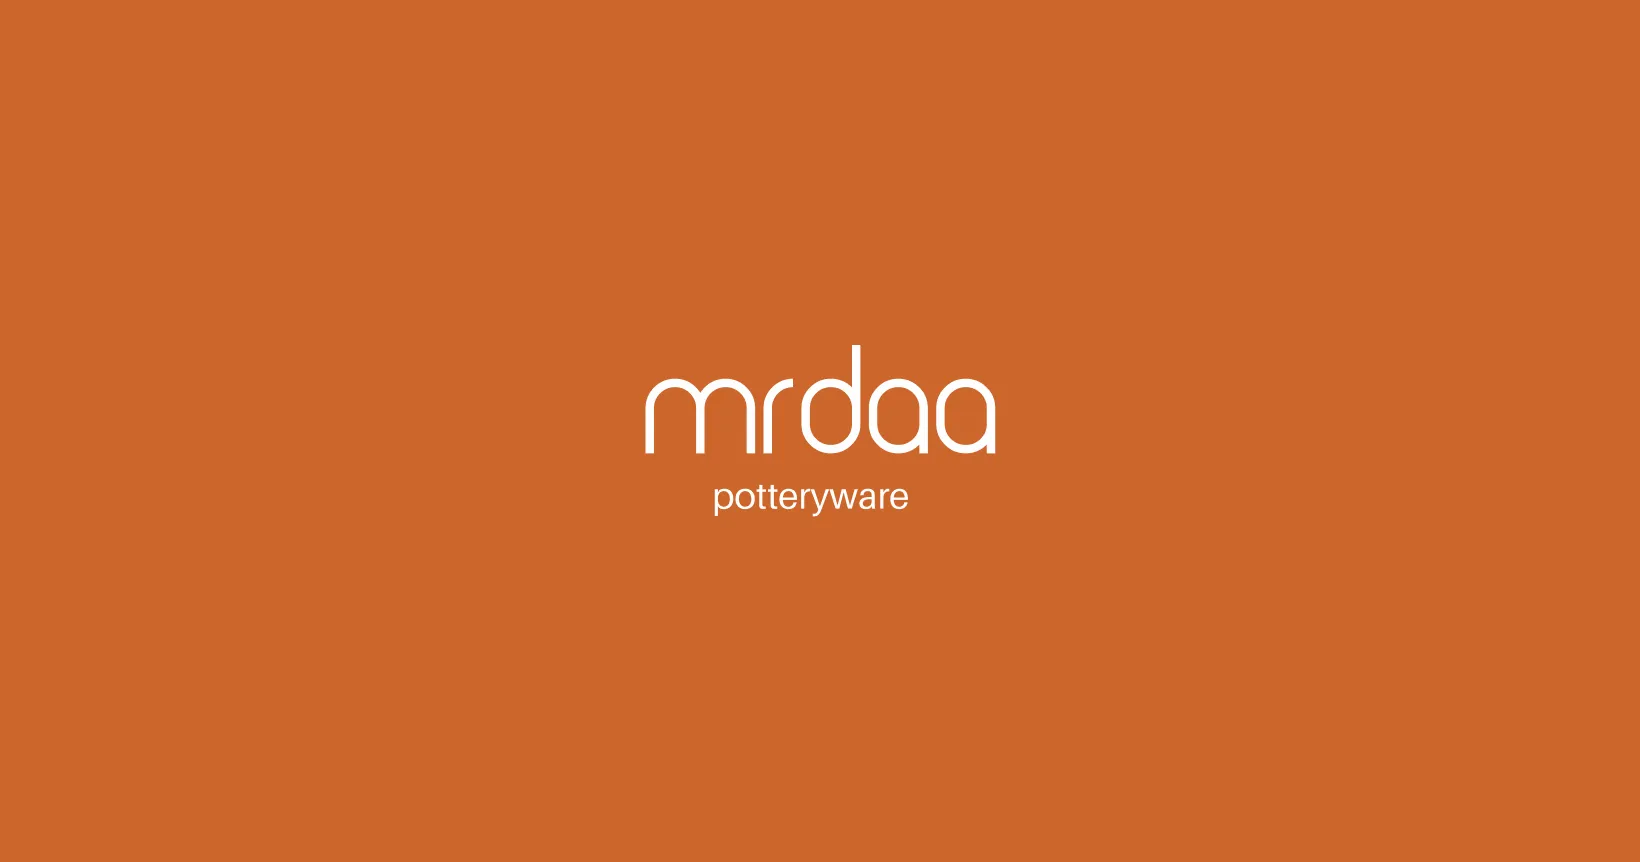 Mrdaa Potteryware branding - logo design